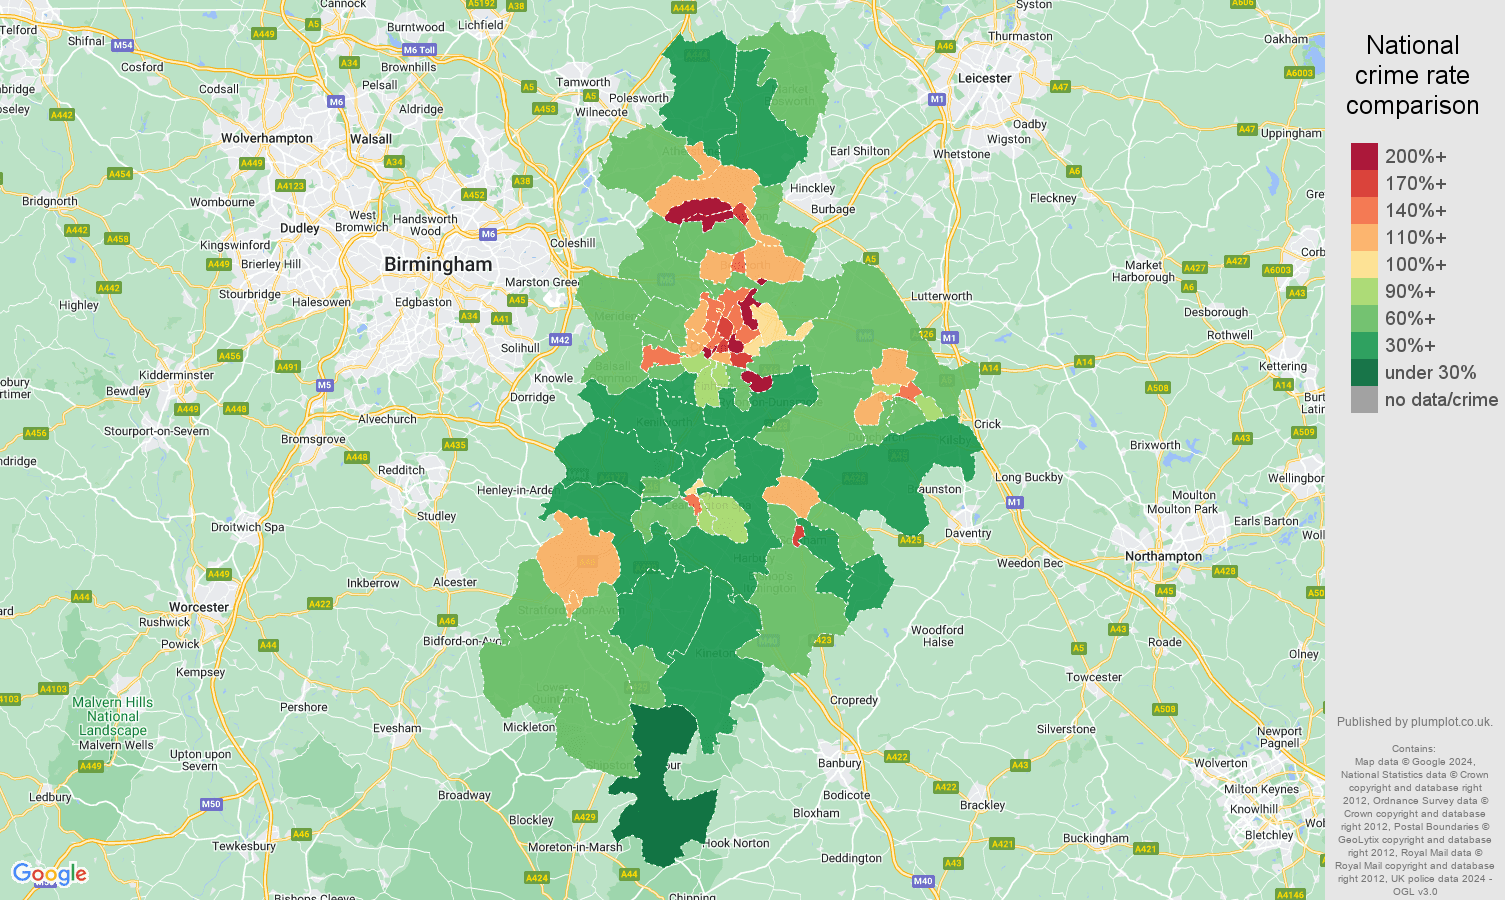 Coventry violent crime rate comparison map